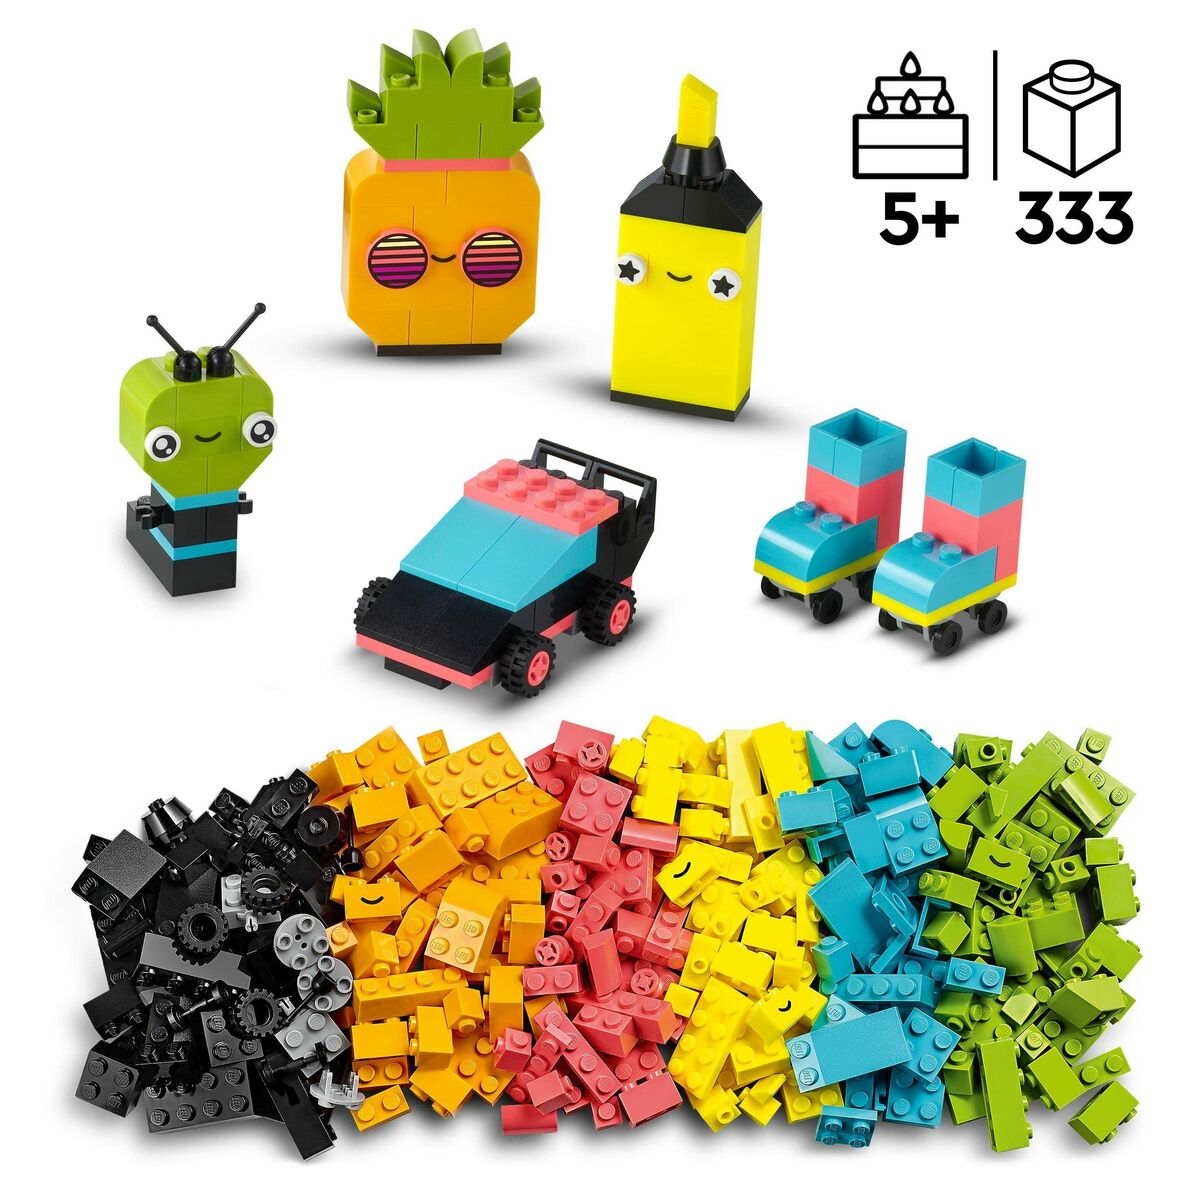 Byggsats Lego Classic Neon-Leksaker och spel-Lego-peaceofhome.se